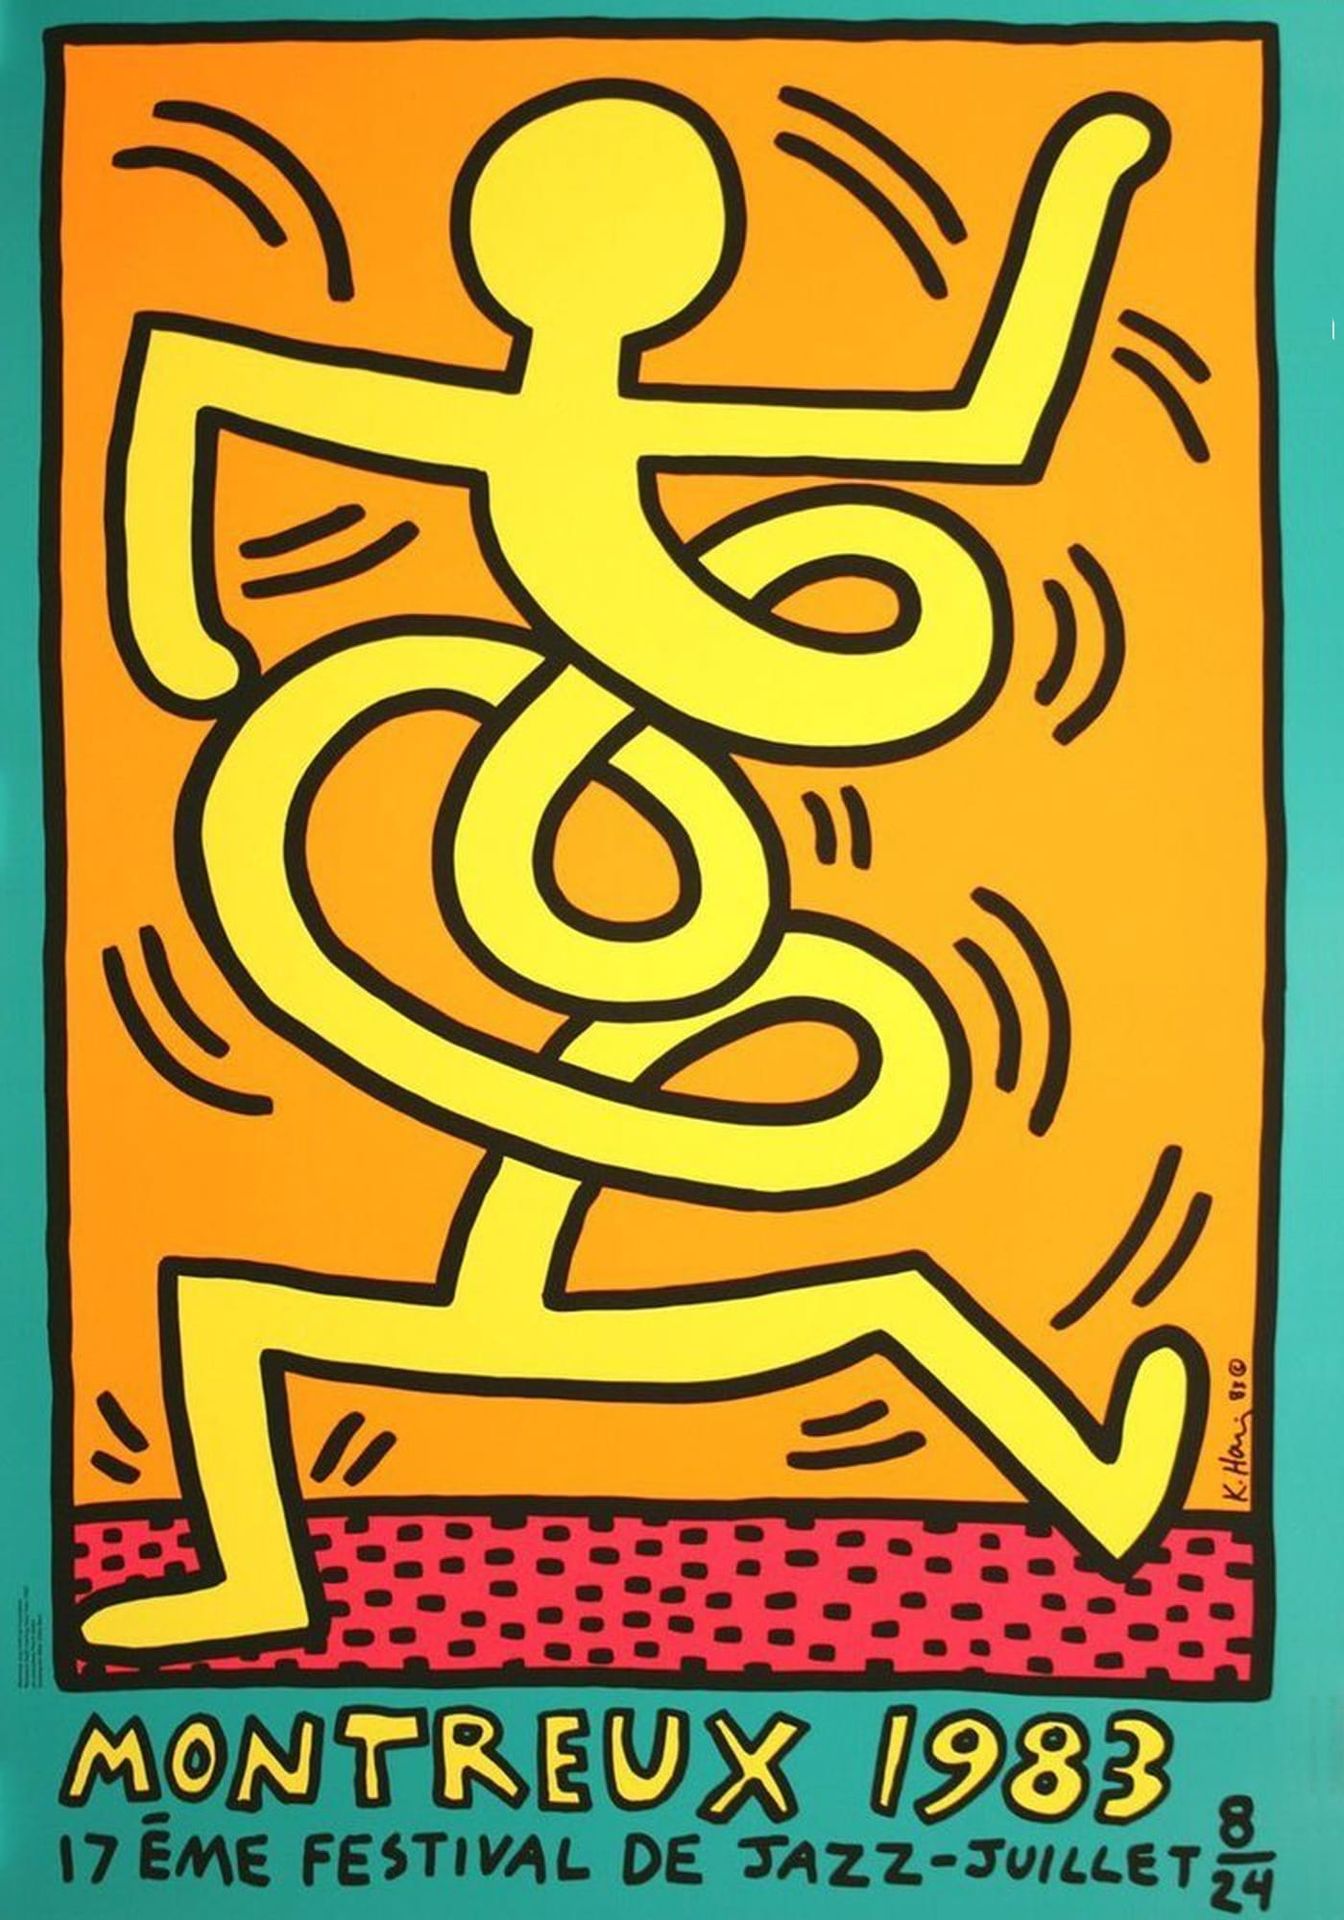 Null Keith Haring (después), Cartel de Montreux Yellow Man, 1983 

Papel para ca&hellip;